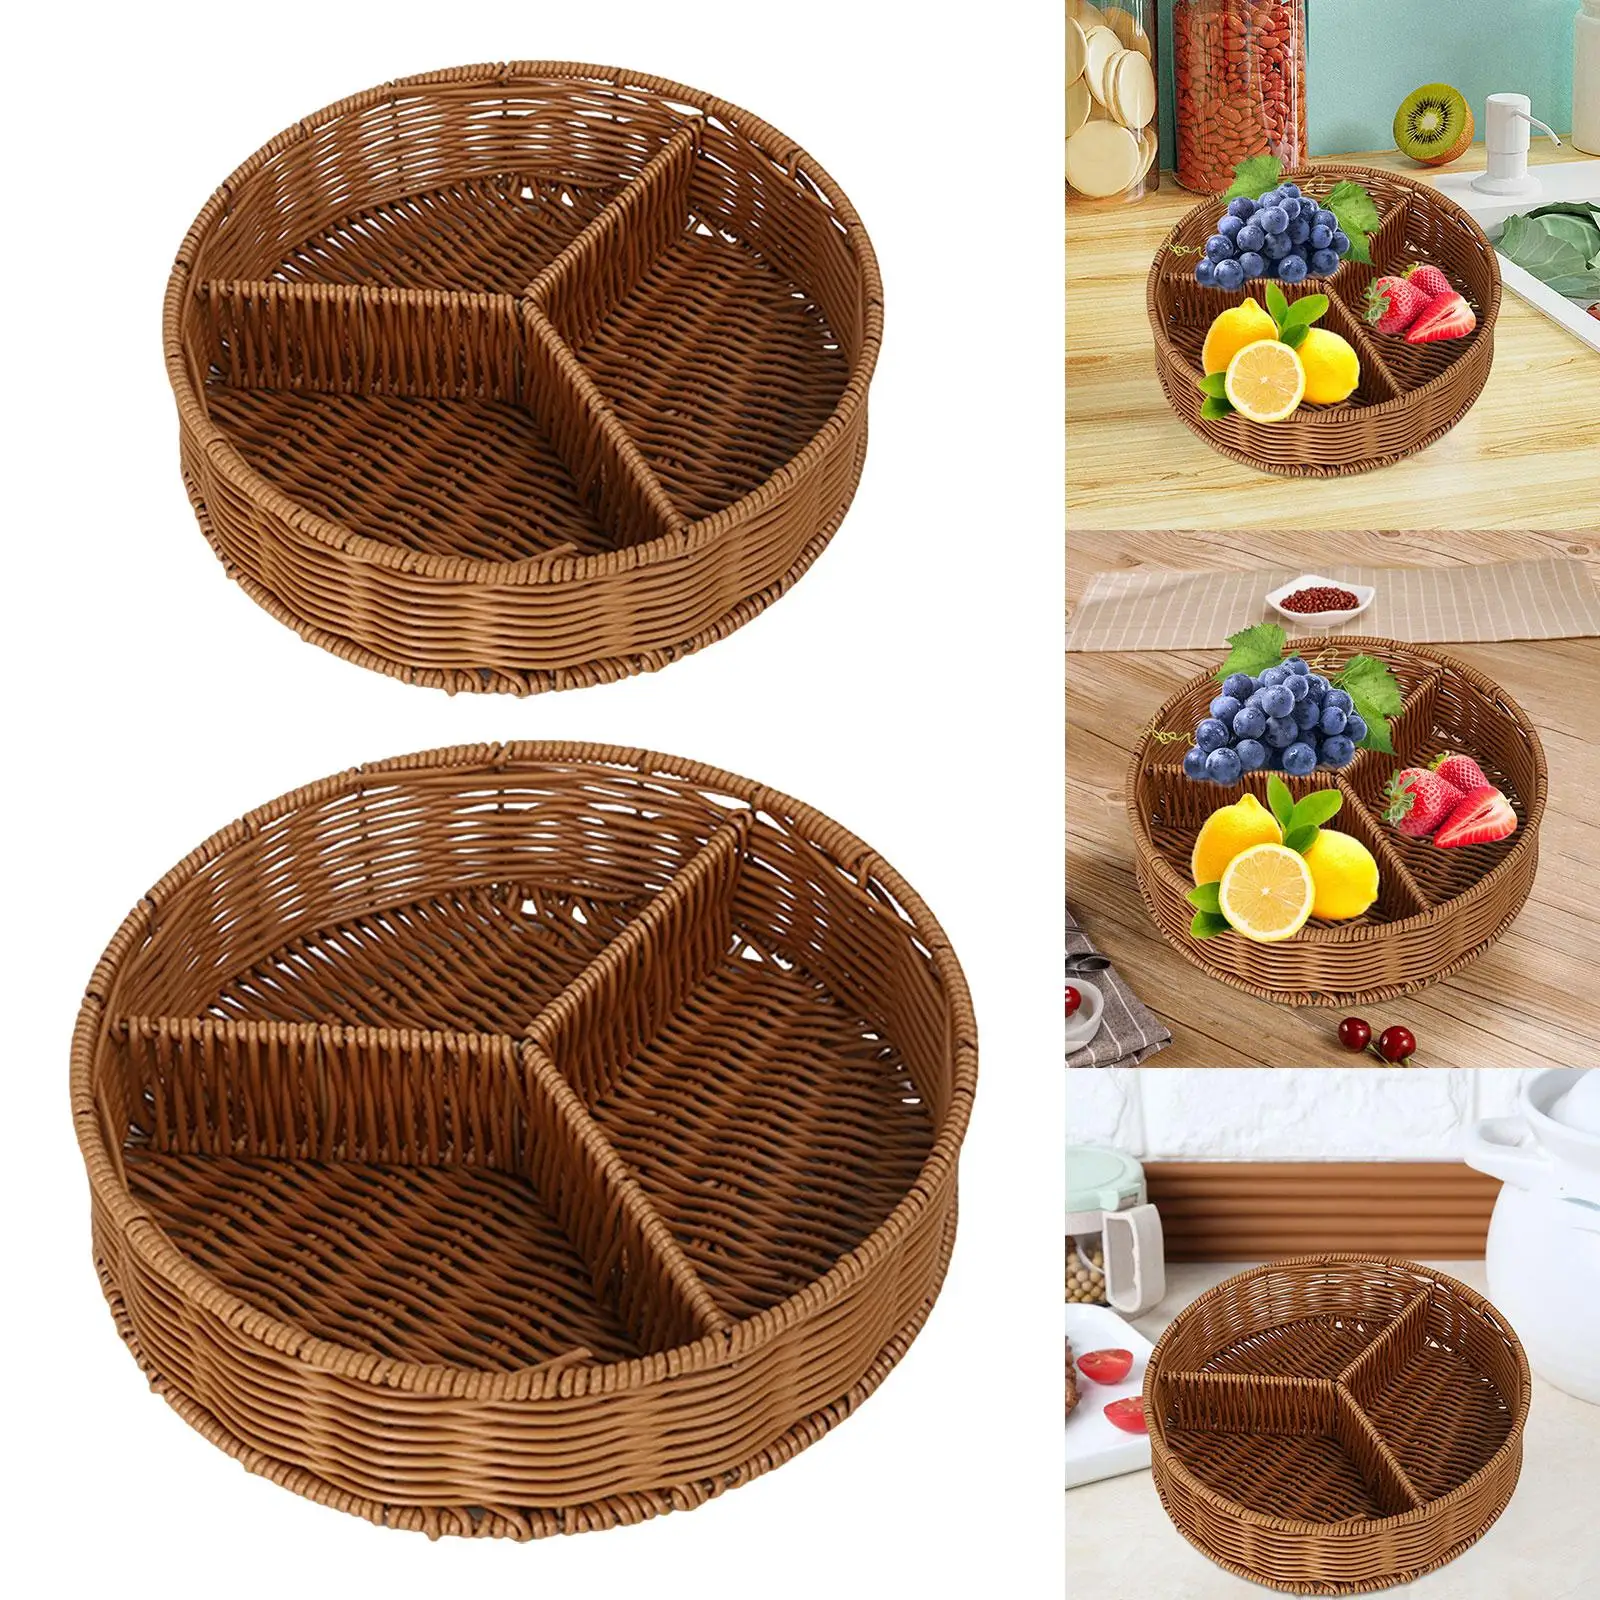 Imitation Rattan Bread Basket Organizer Fruit Plate Trays Handmade Wicker Storage Baskets for Breakfast Fruits